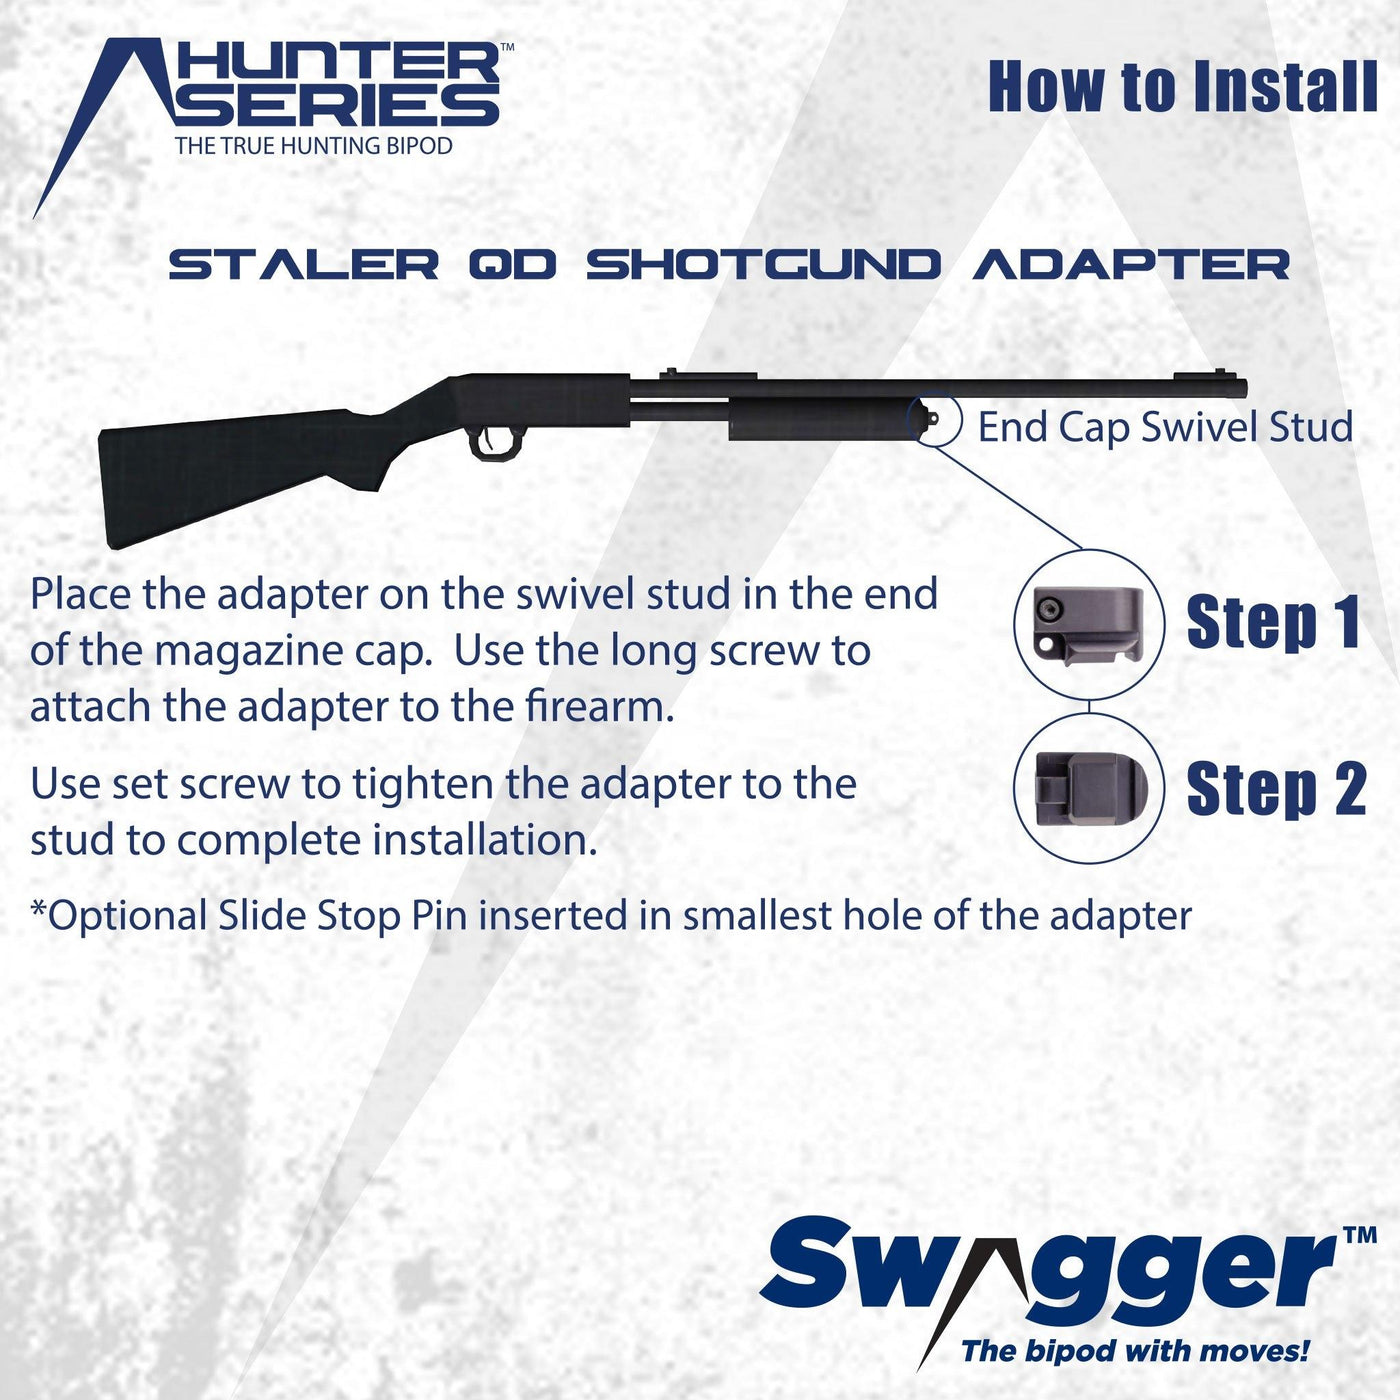 Swagger Bipod QD Shotgun Adapter instructions